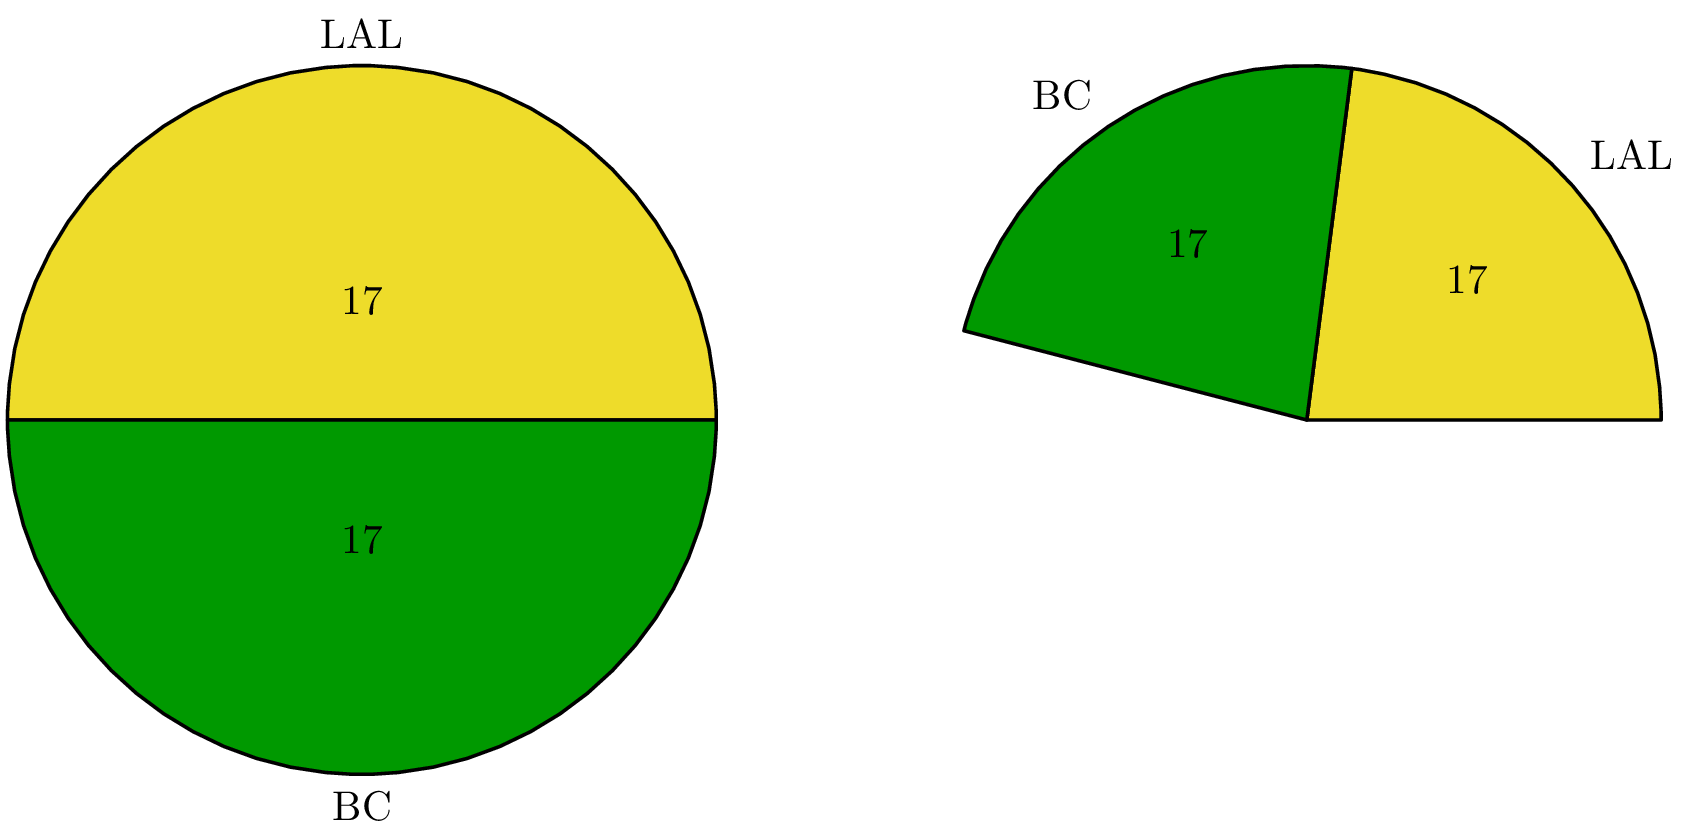 Plot two slices of PIE chart in LaTeX Tikz Pgf pie